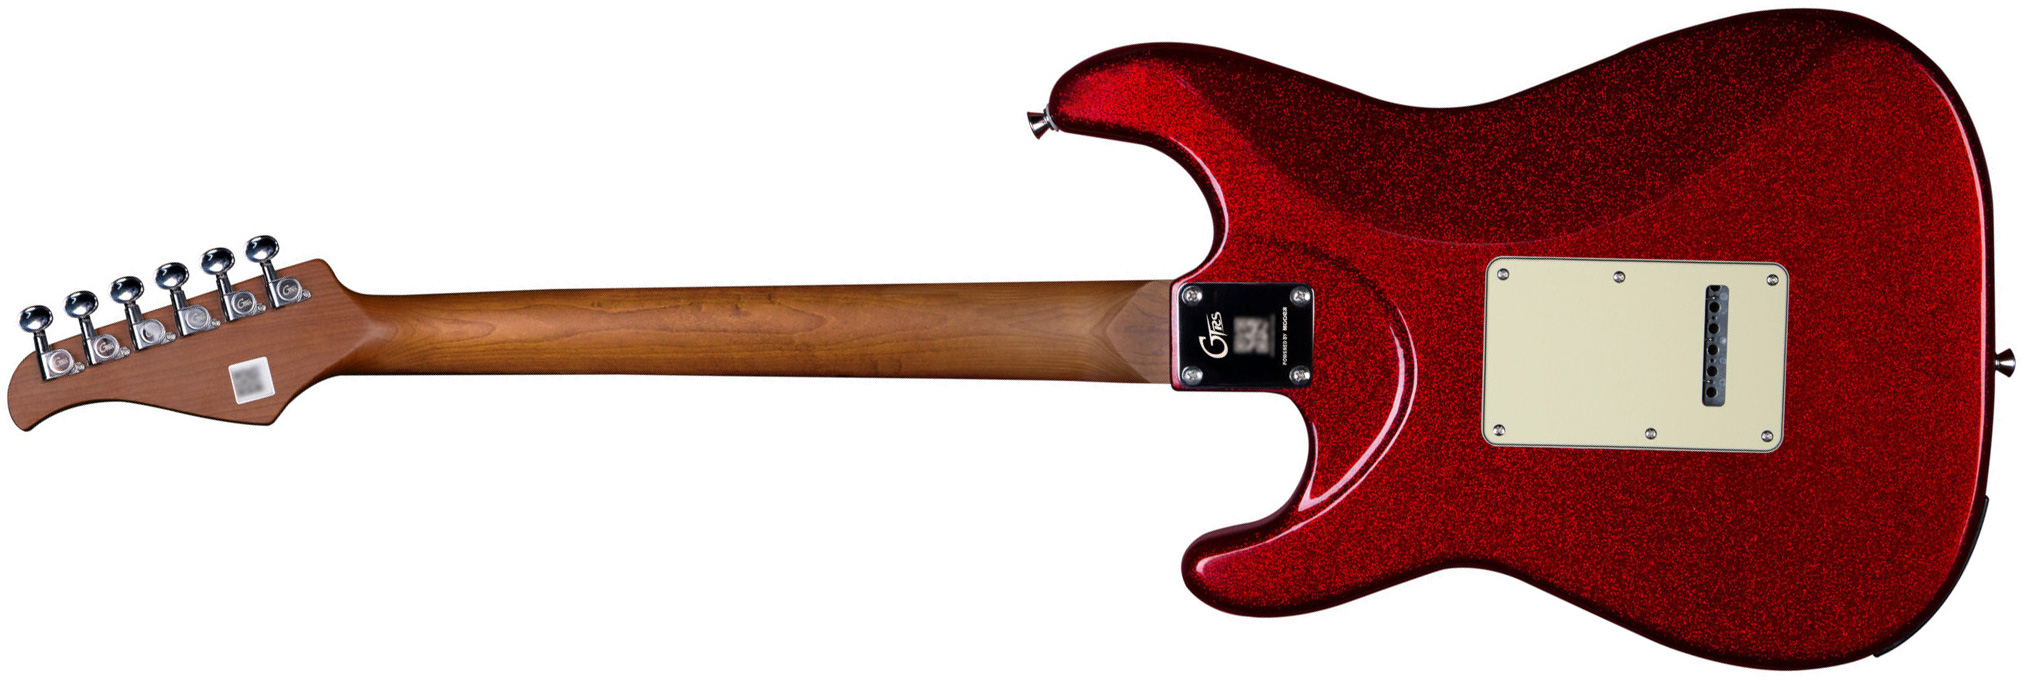 Mooer Gtrs S800 Hss Trem Rw - Metal Red - Modeling guitar - Variation 1